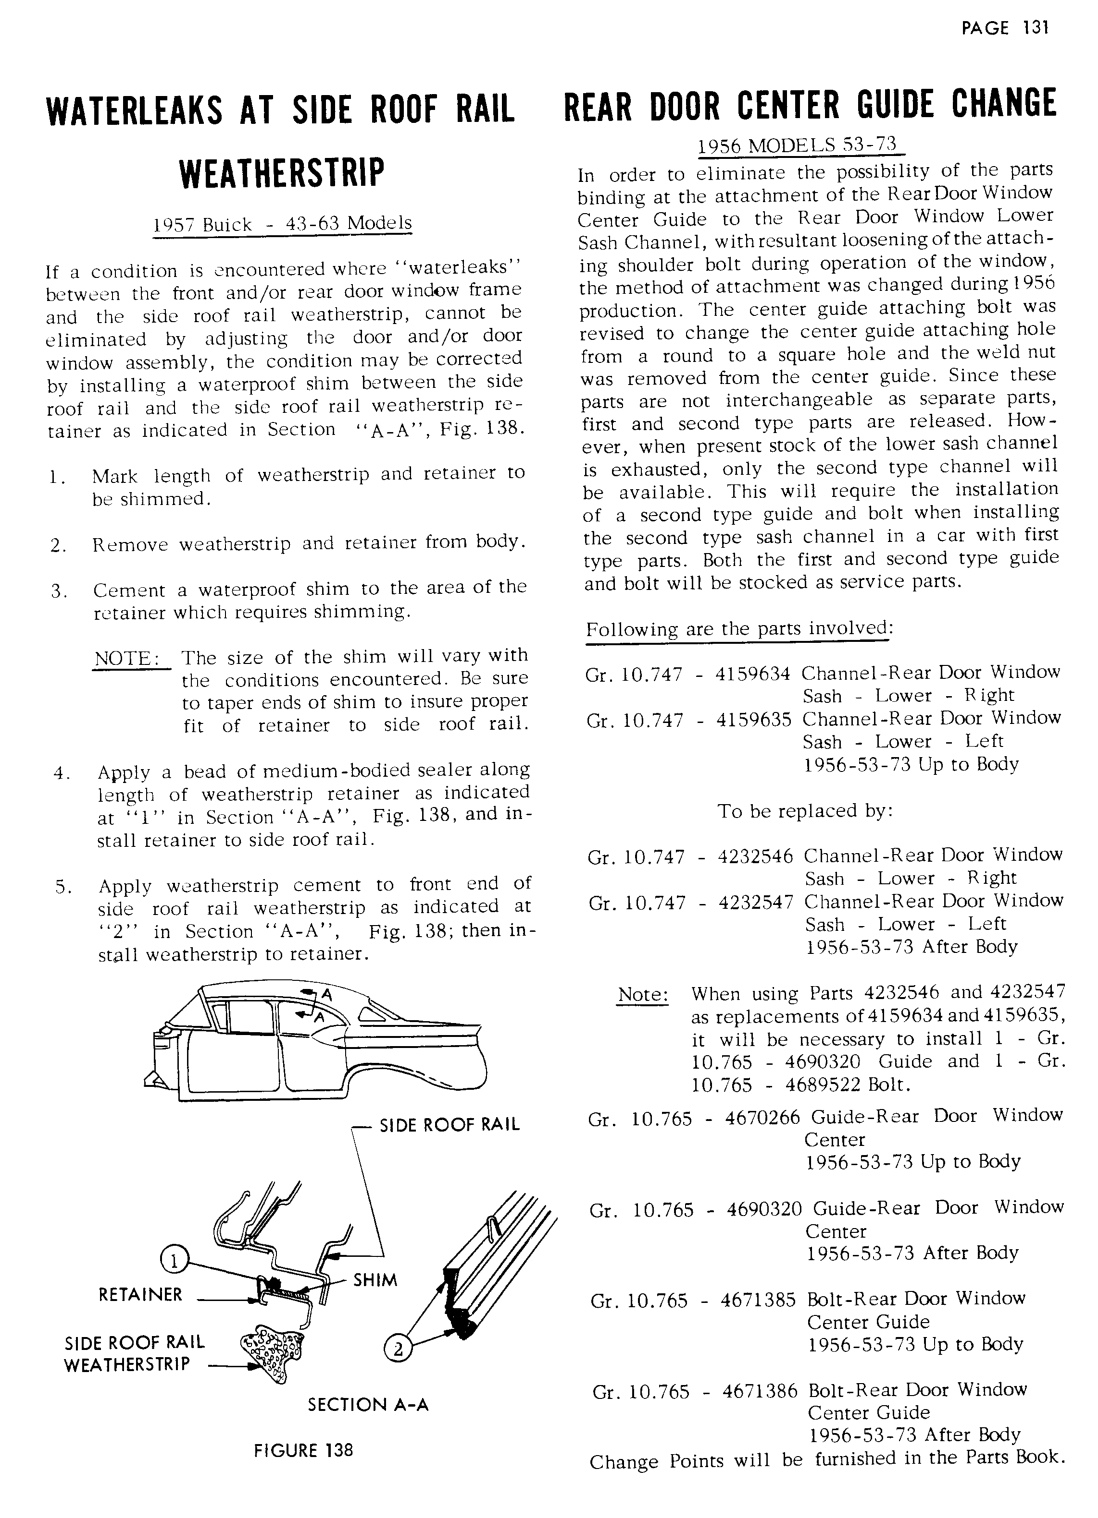 n_1957 Buick Product Service  Bulletins-132-132.jpg